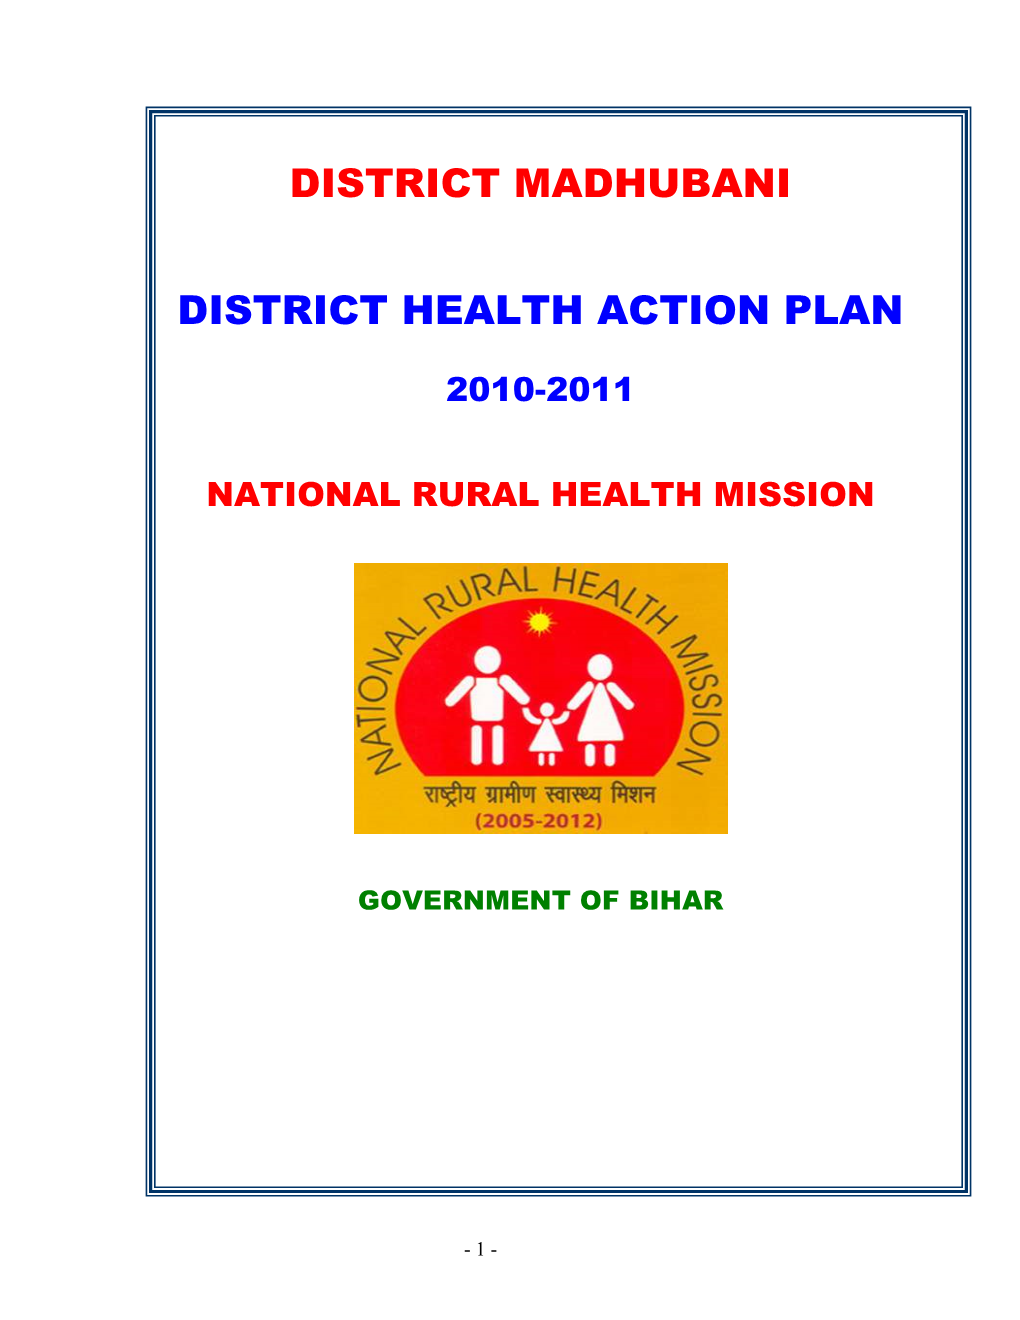 District Madhubani District Health Action Plan